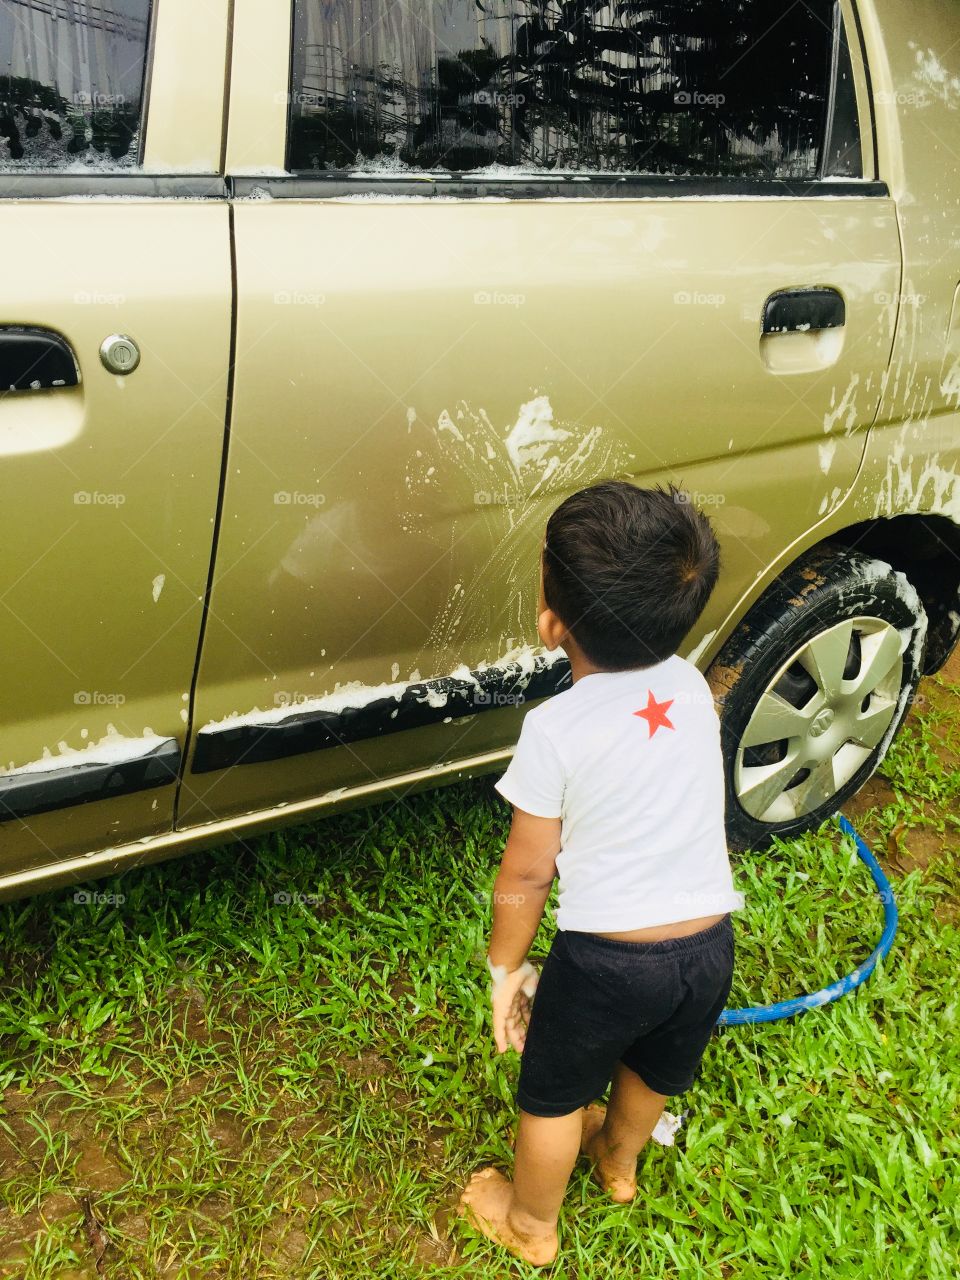 My son is washing my car ( hard working)